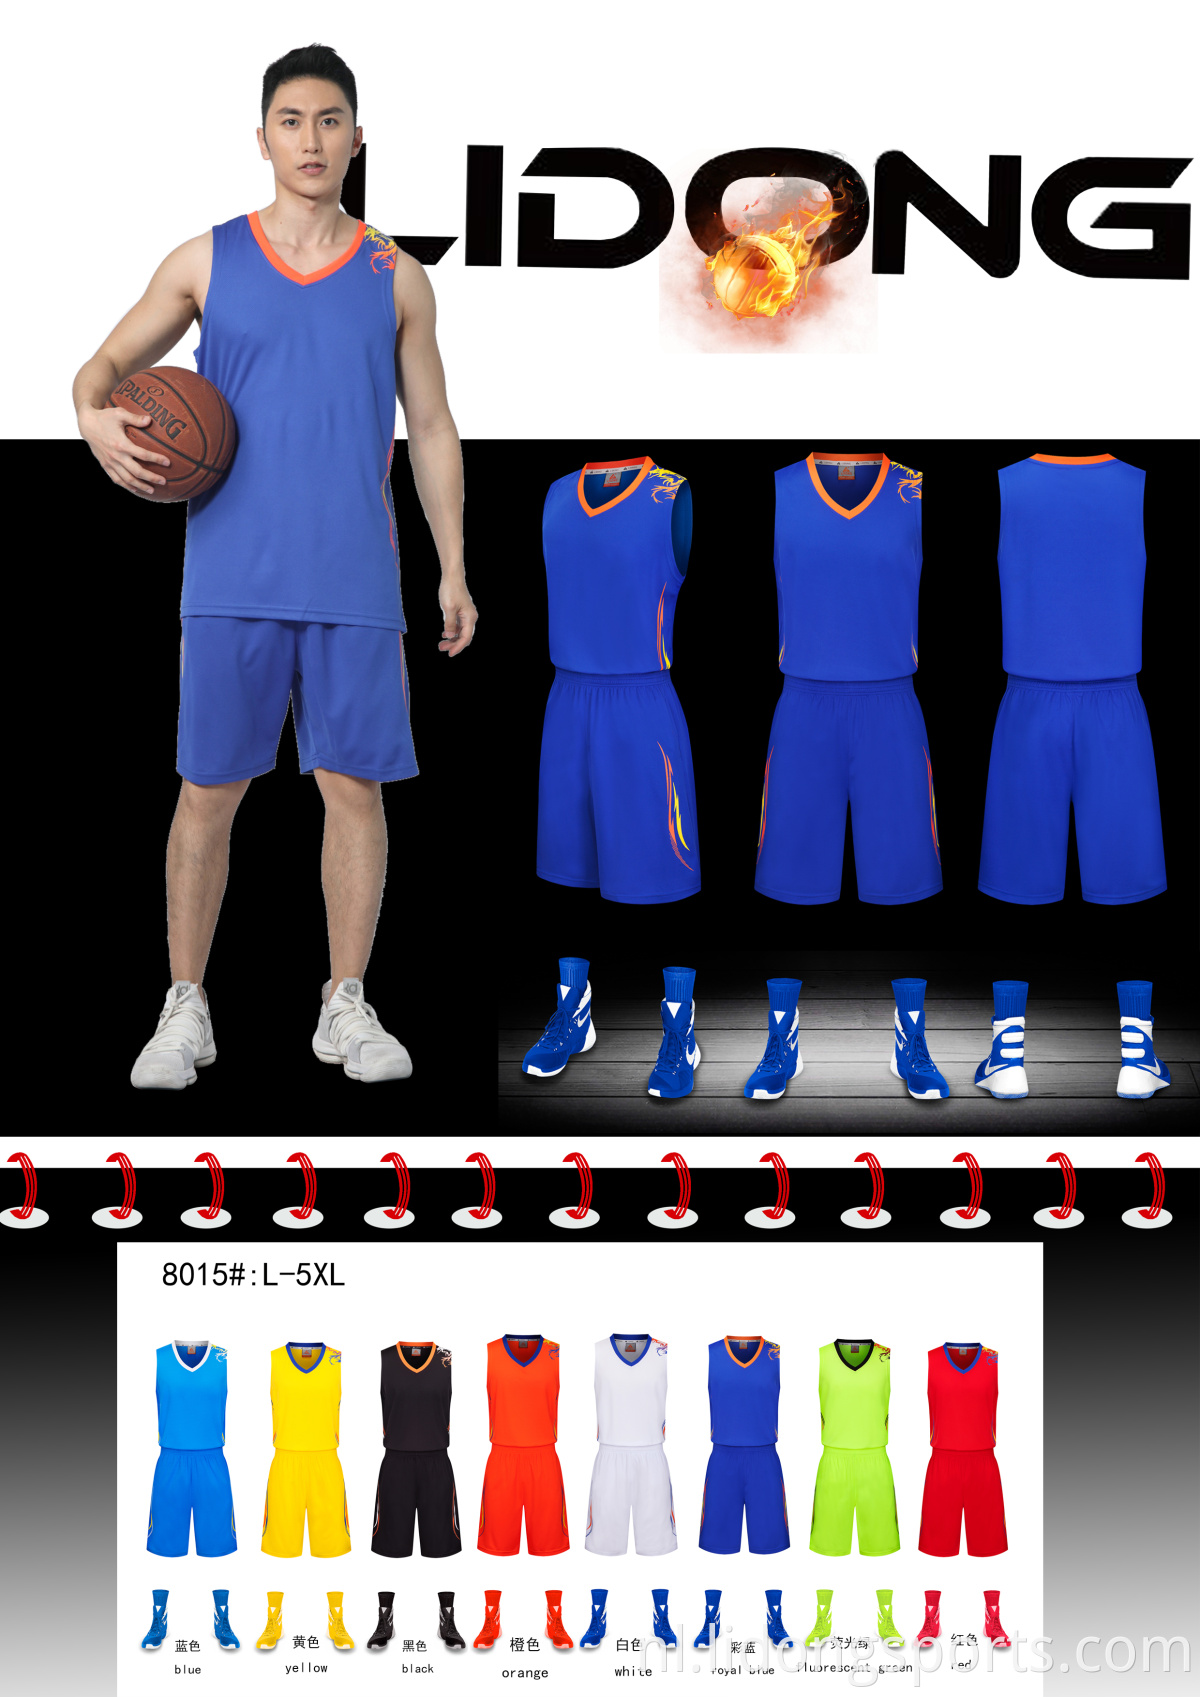 2021 Guangzhou nieuwste mannen basketbal jersey uniform ontwerp rode sportkleding aangepaste basketbalkleding aangepast